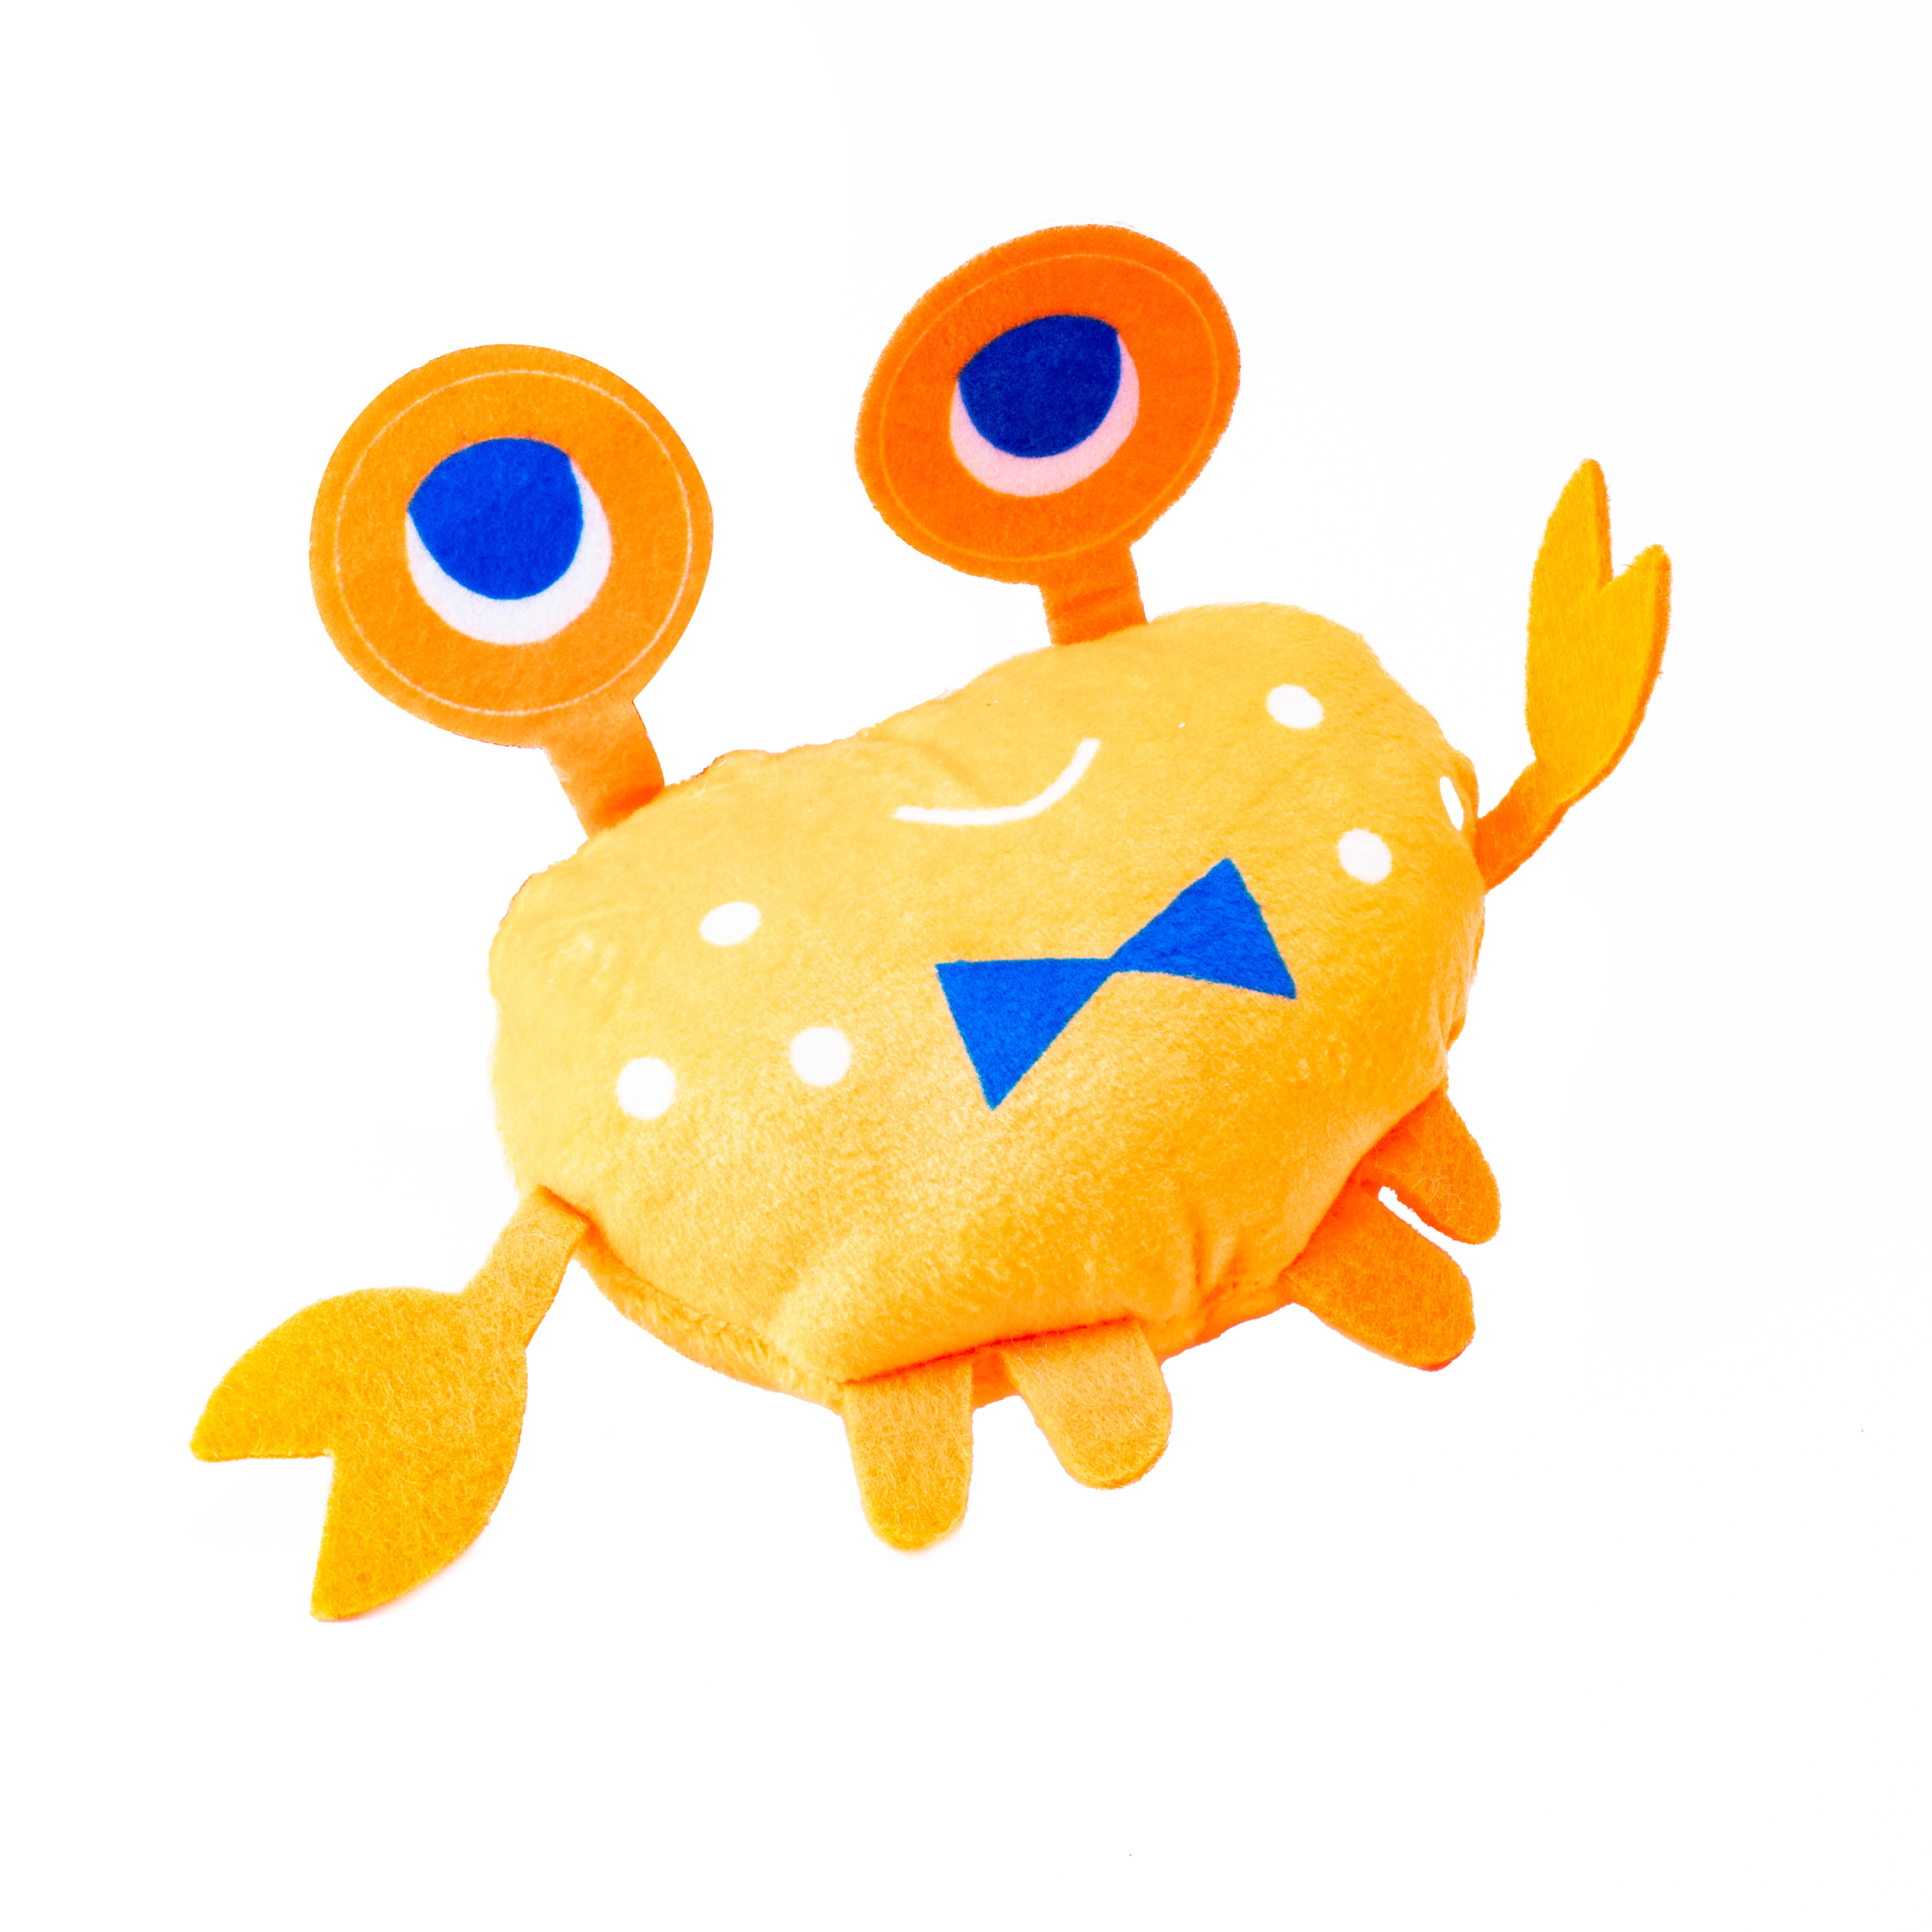 Peluche cangrejo para mascota naranja y azul